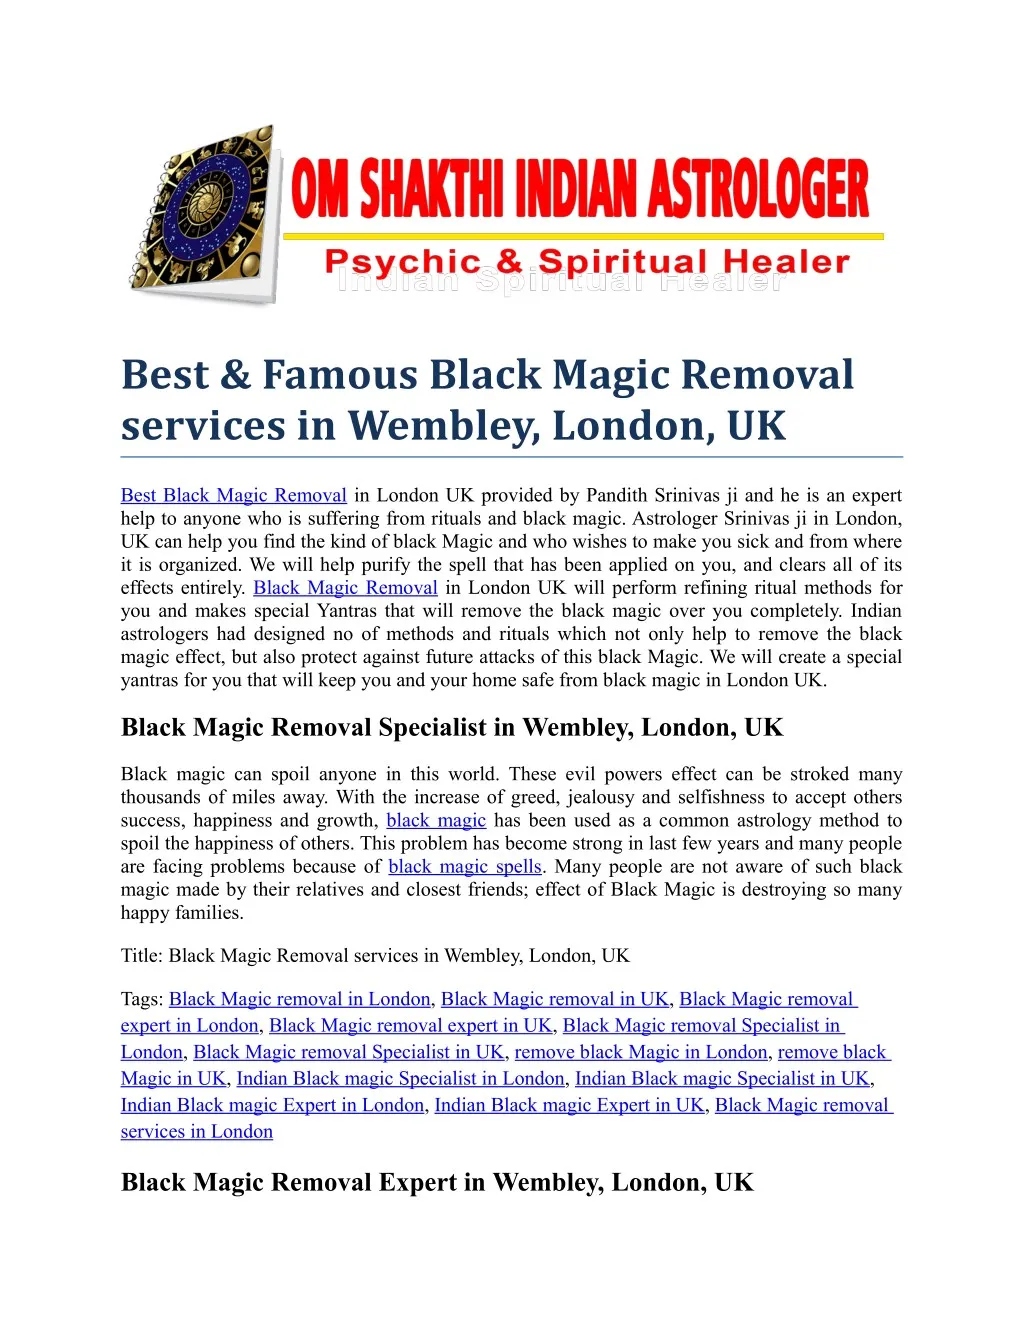 best famous black magic removal services